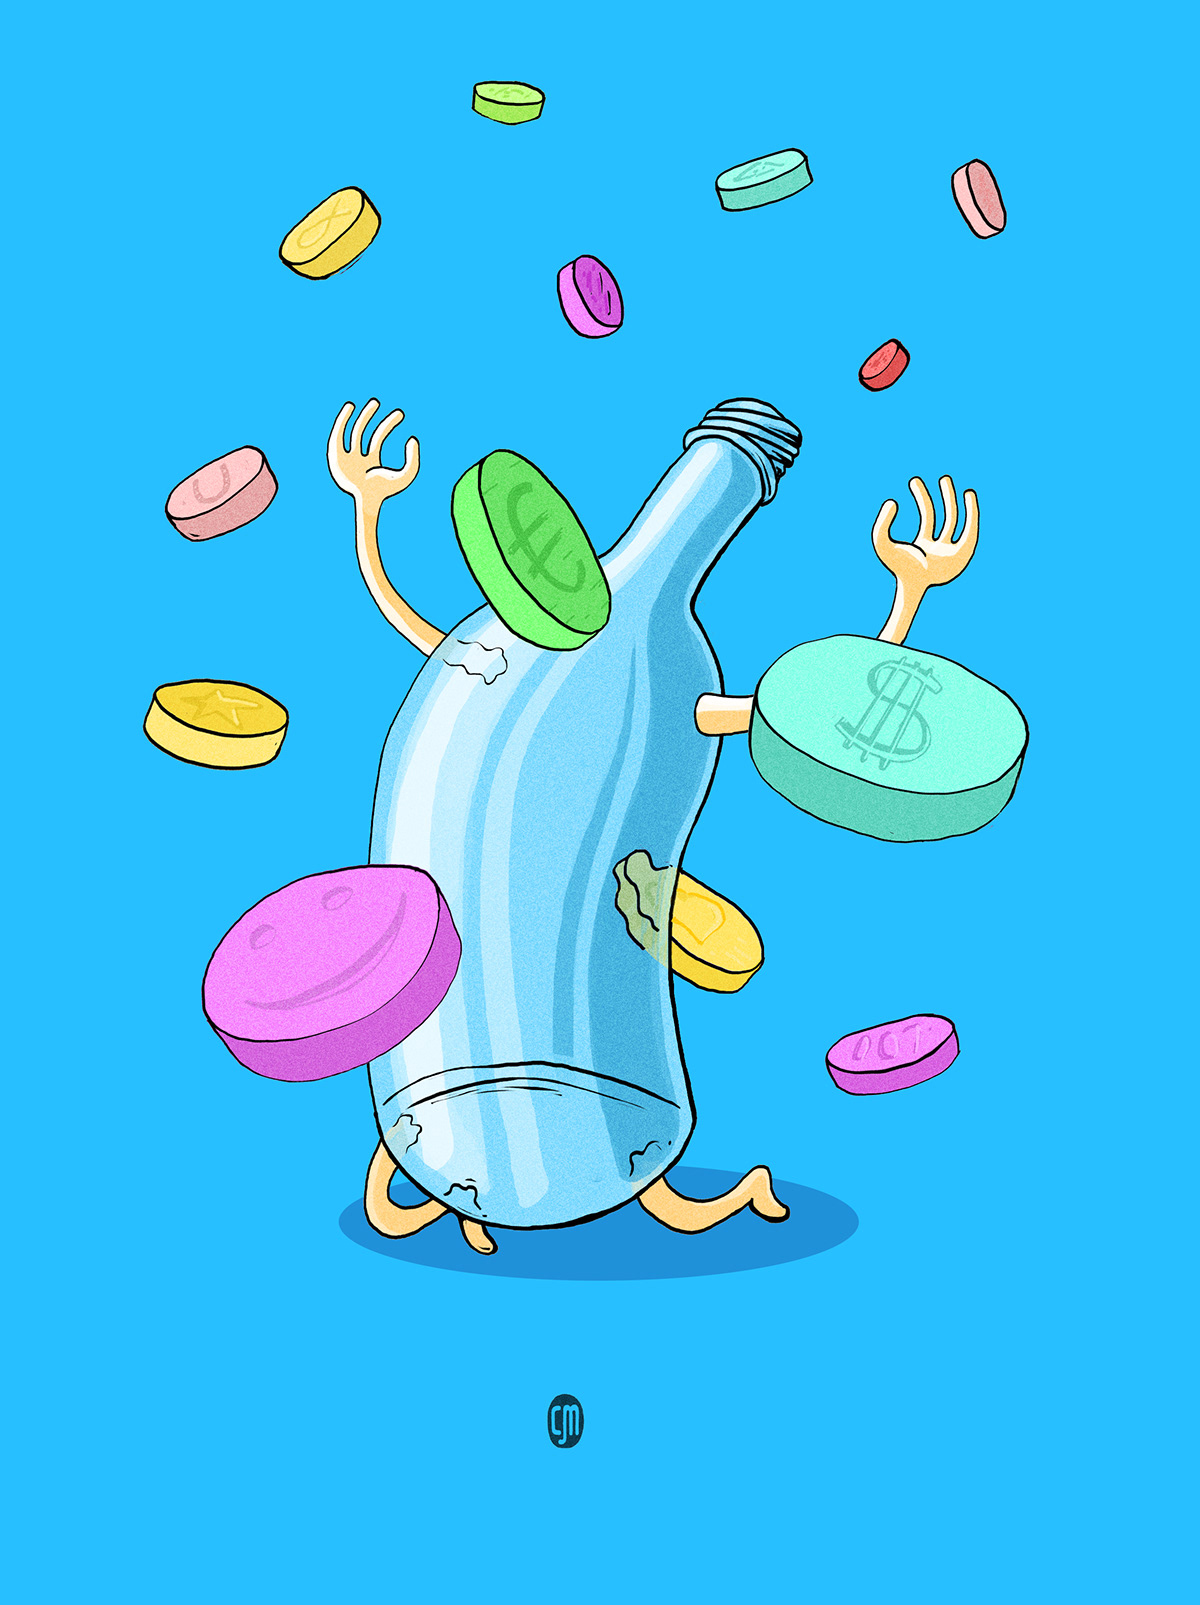 bottle illustration